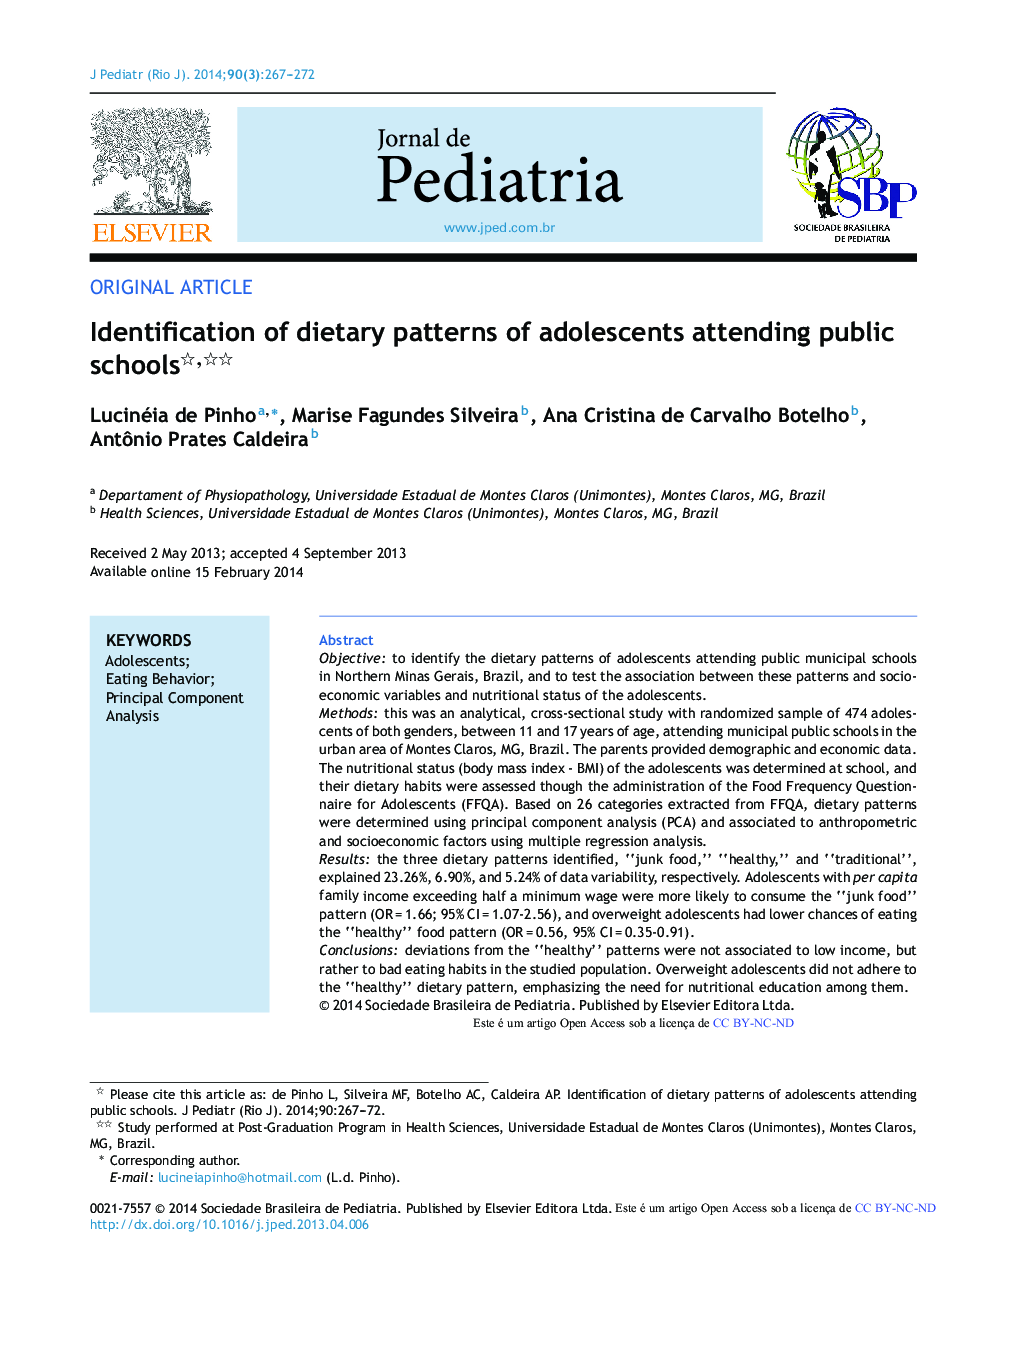 Identification of dietary patterns of adolescents attending public schools 